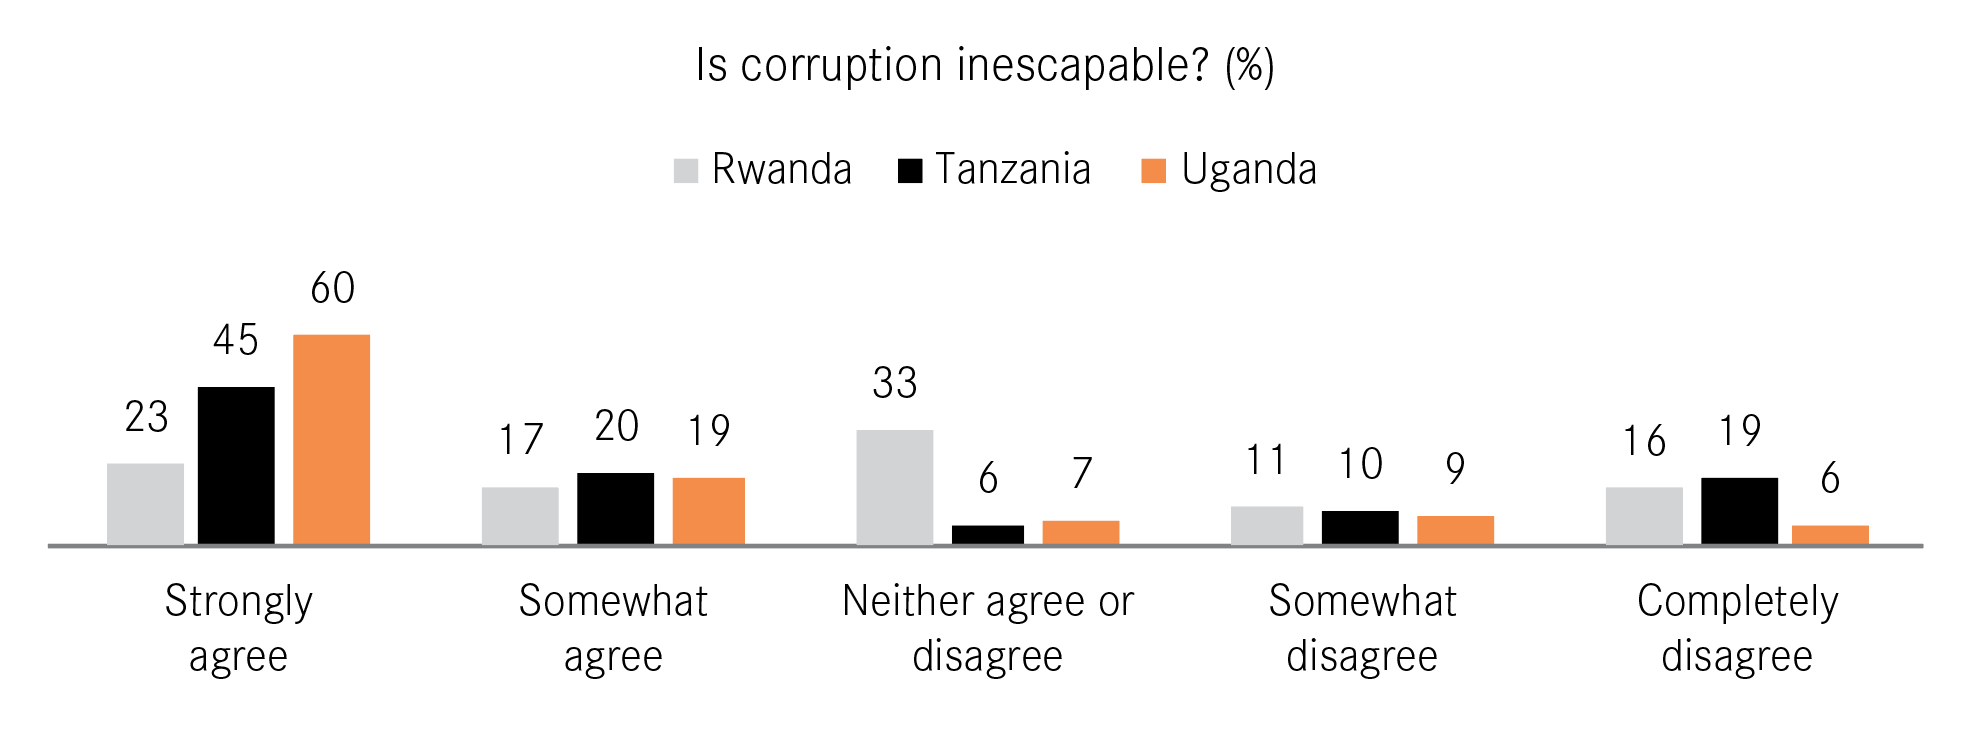 Figure 1: Is corruption inescapable in Rwanda, Tanzania and Uganda?